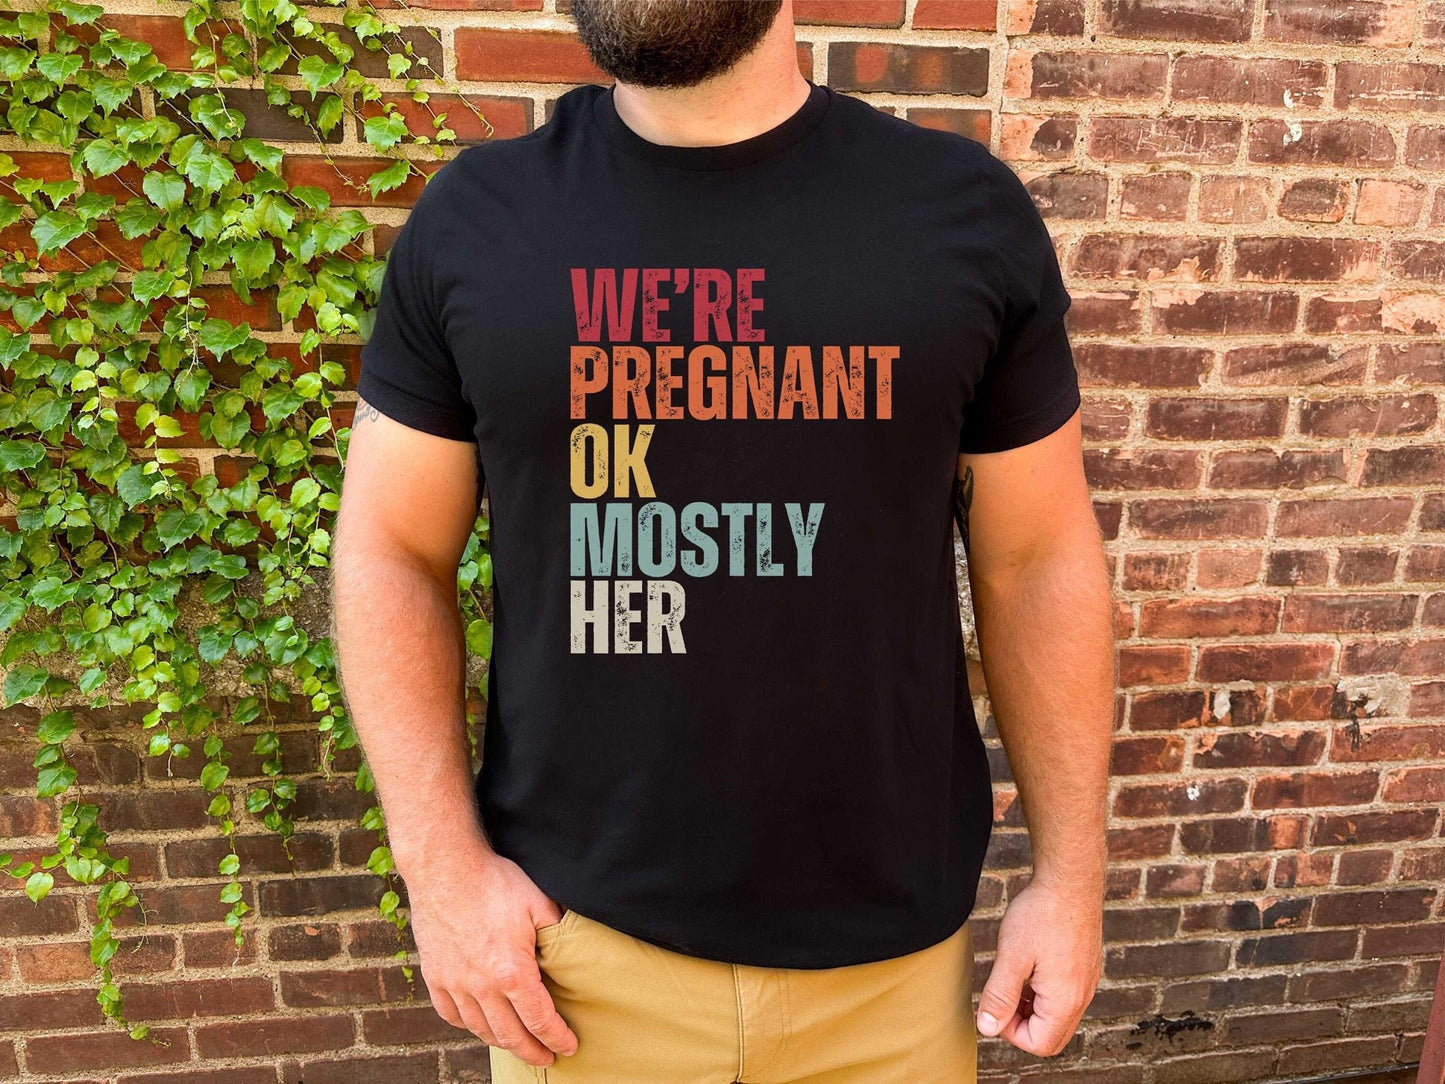 Pregnancy Announcement shirt, New Dad Gift, First Time Dad, Expecting Dad Shirt, Baby announcement - SBS T Shop